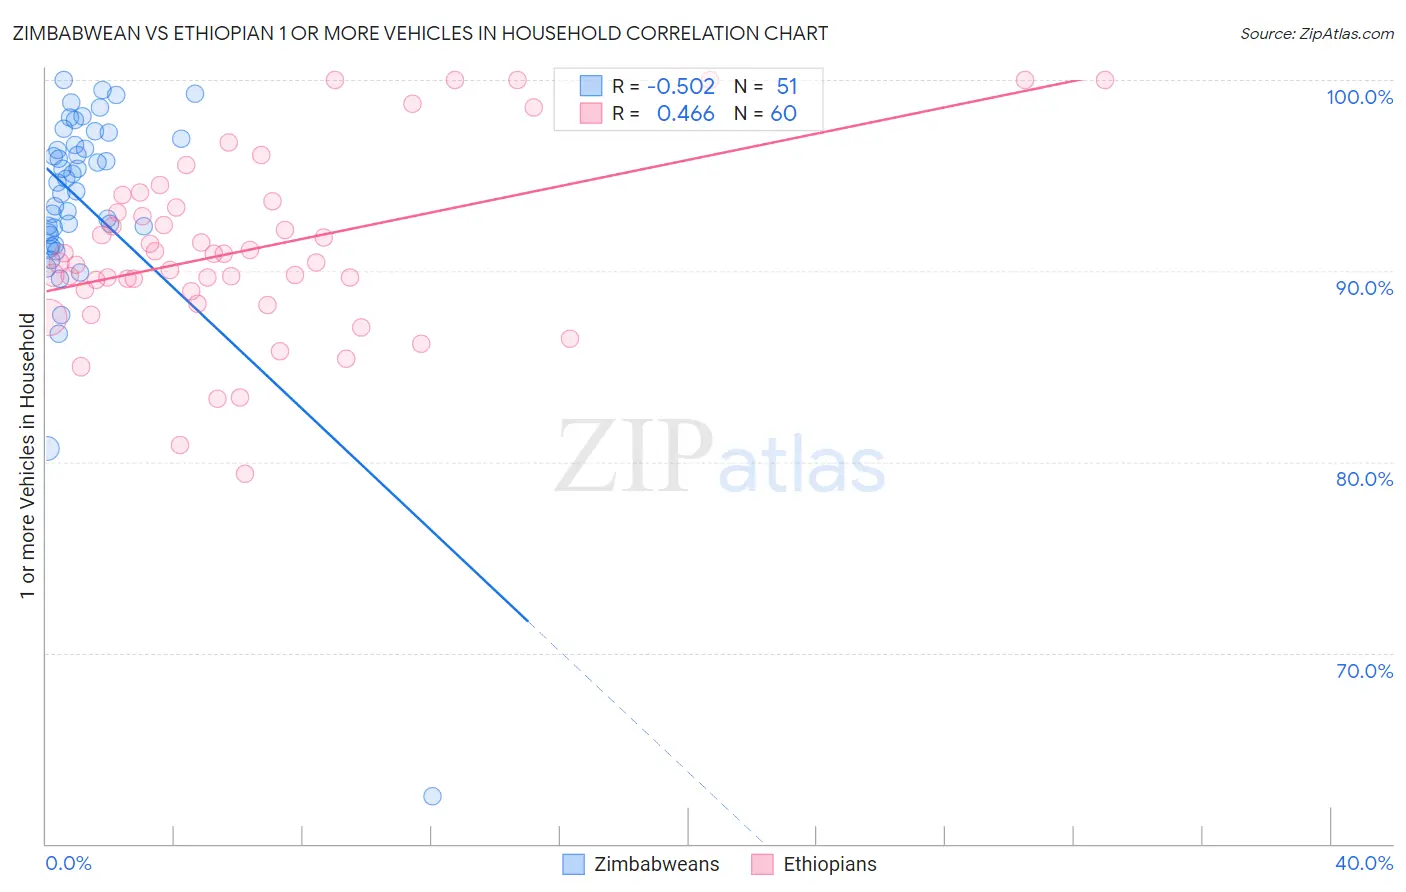 Zimbabwean vs Ethiopian 1 or more Vehicles in Household